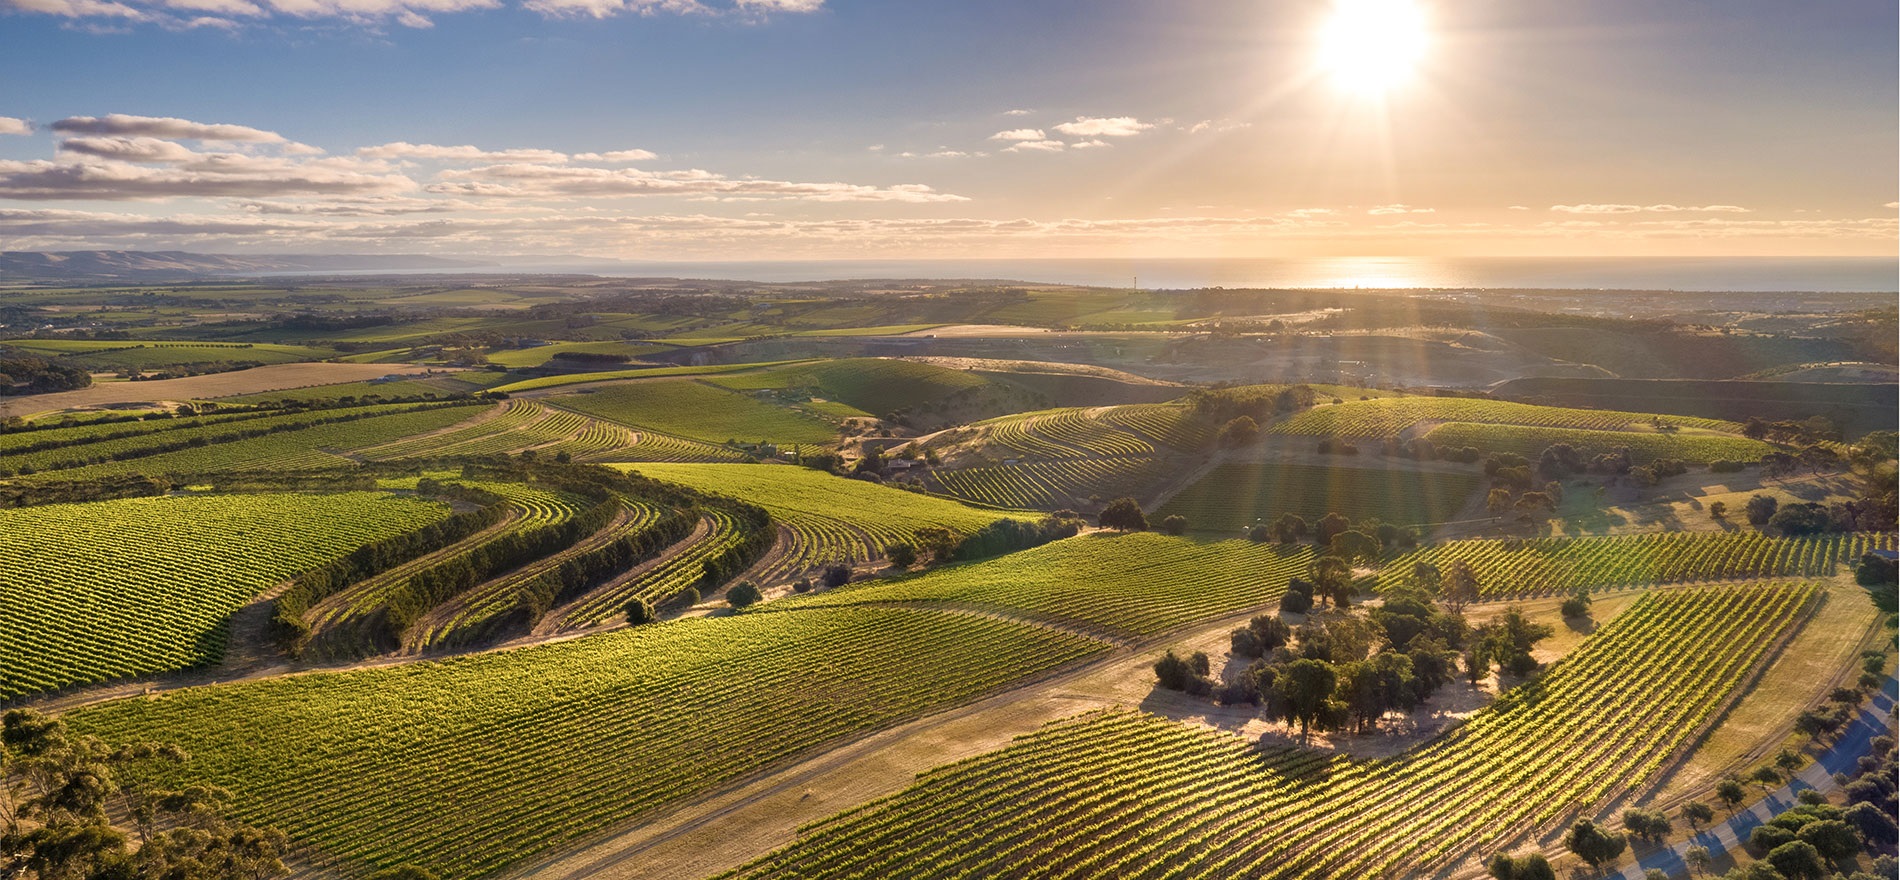 McLaren Vale vineyards - Wine Australia.jpg